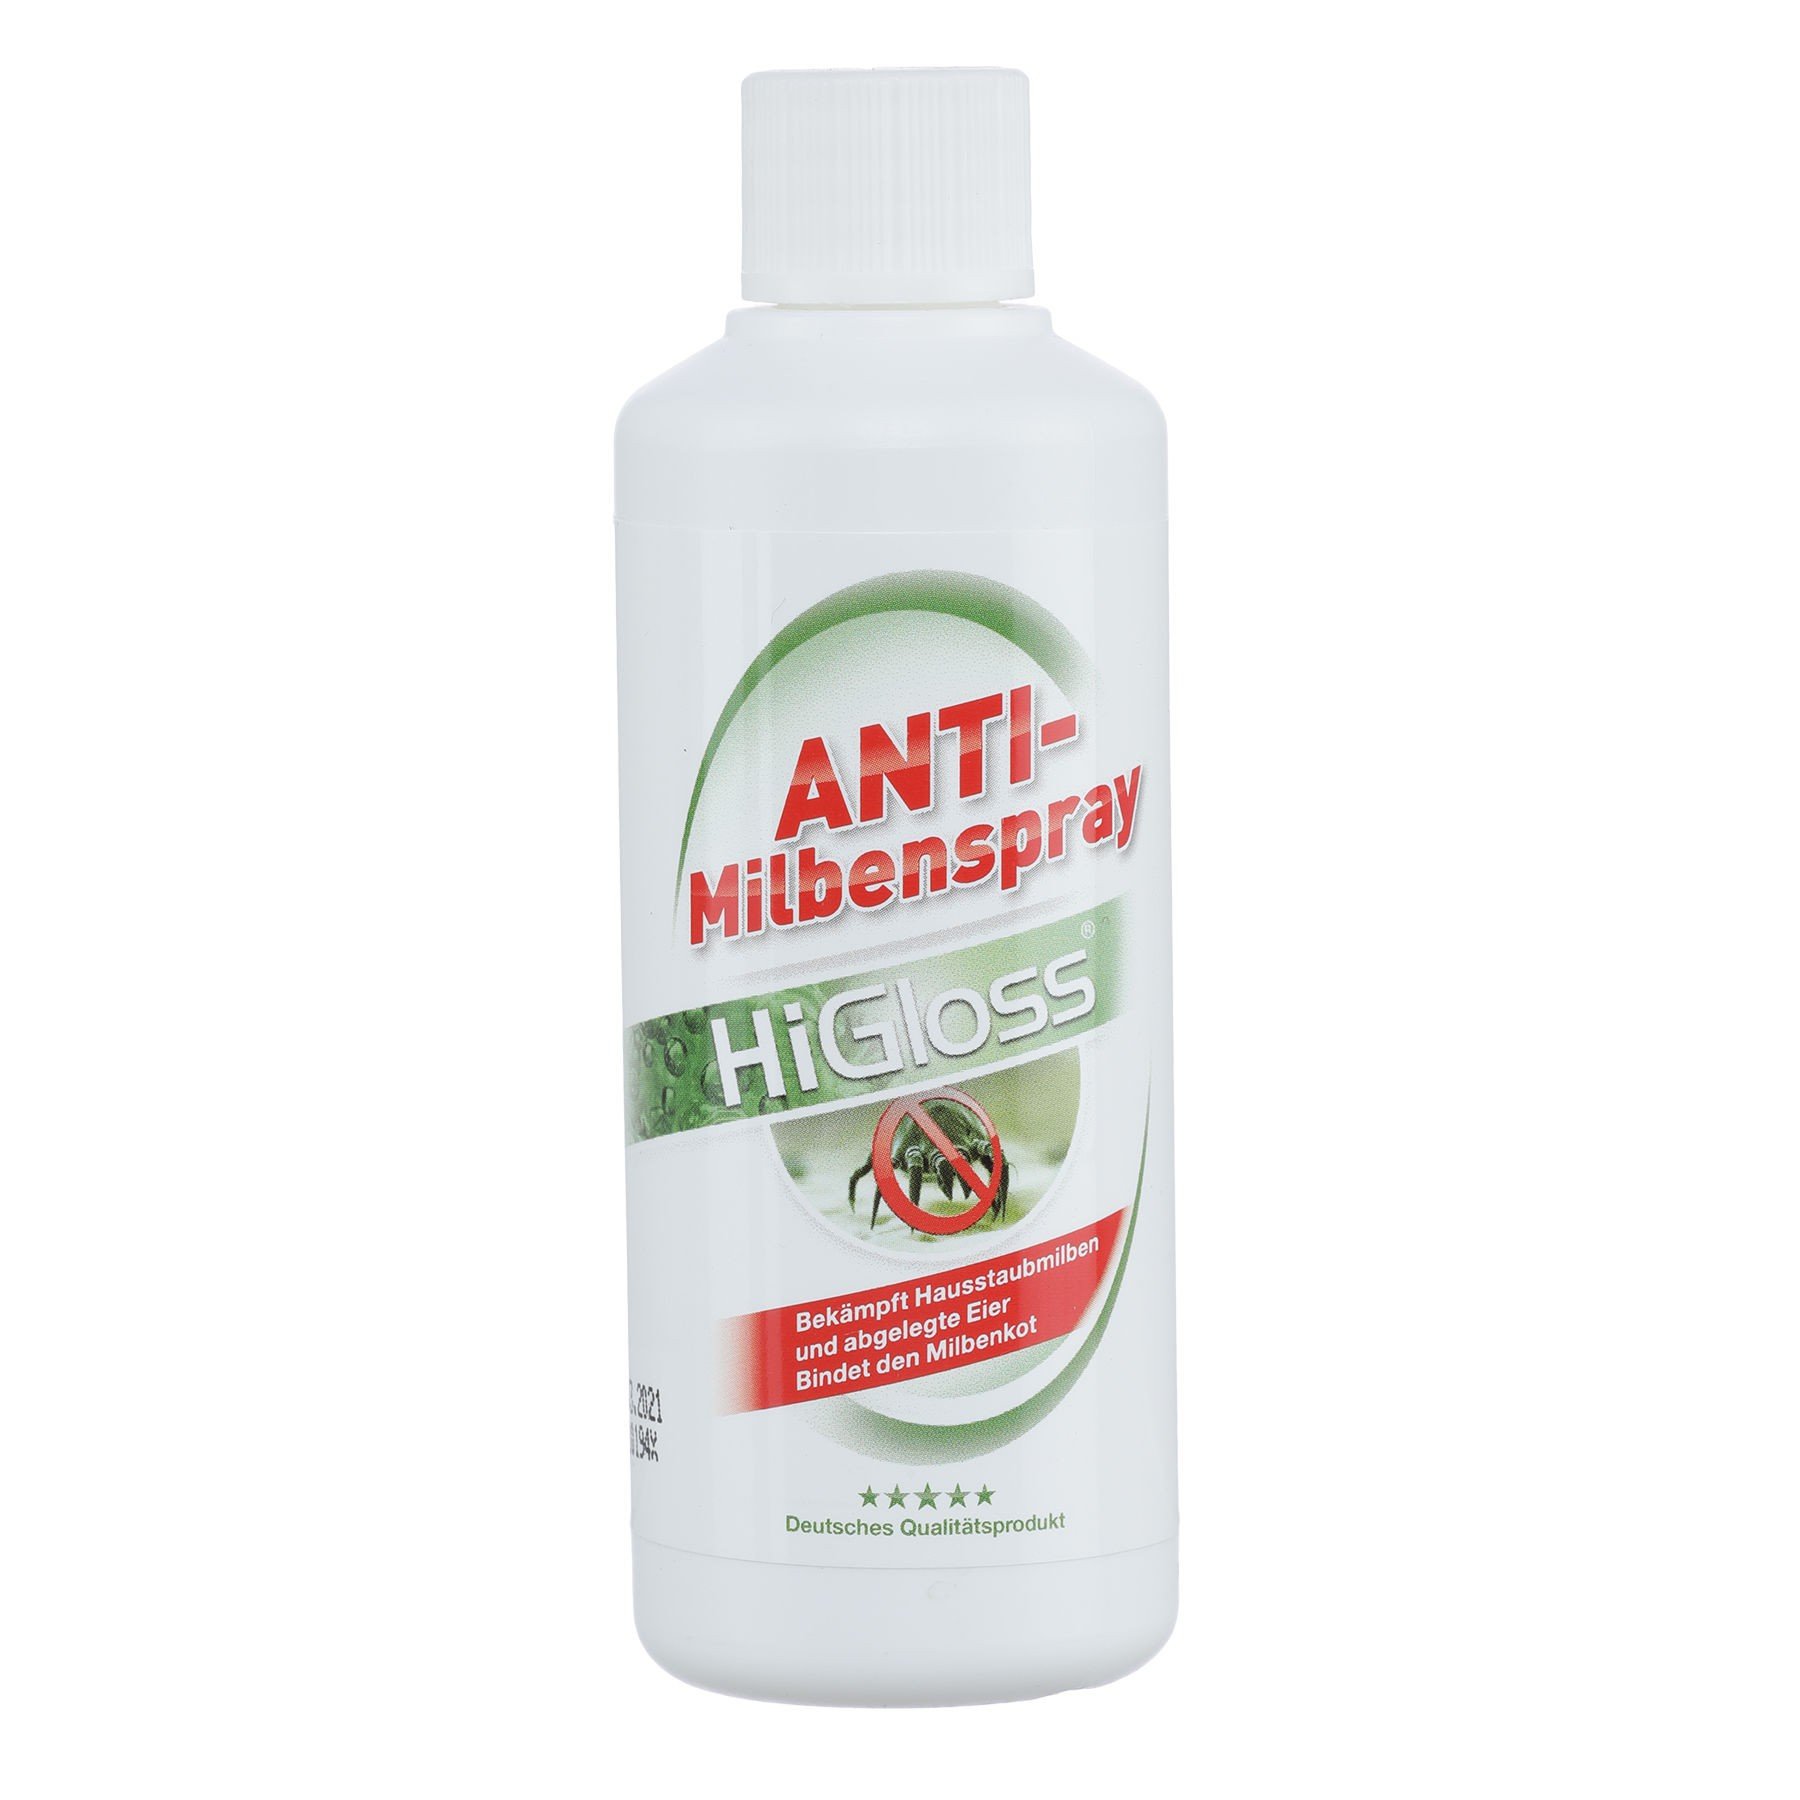 ANTI-Milbenspray, 500 ml + Reisespray - Produkte - HiGloss - Marken